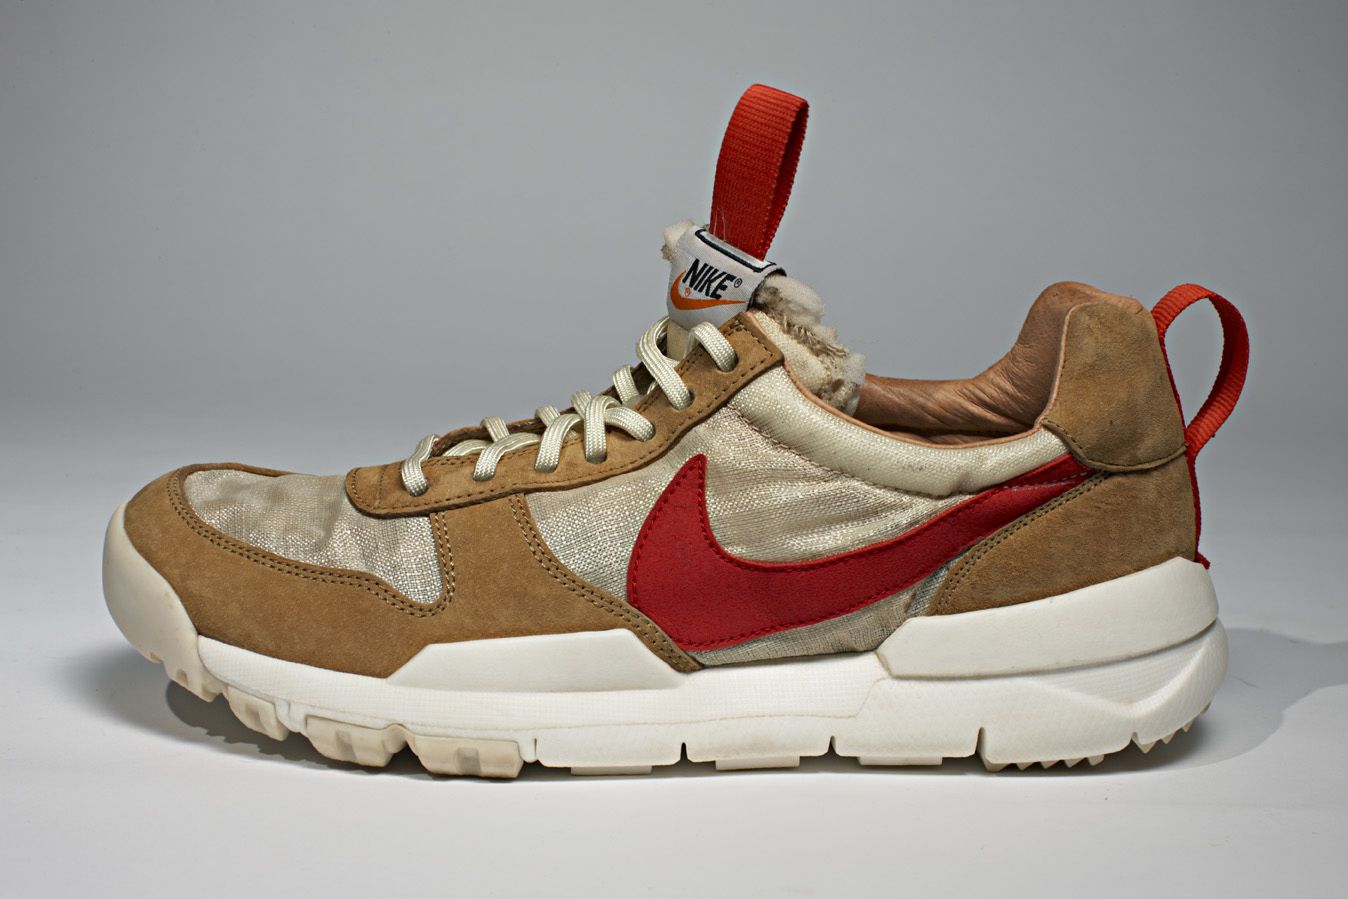 Nike Mars Yard. Nike Craft Mars Yard Shoe 2.0 Tom sachs Space Camp. NIKECRAFT Mars Yard. Tom sachs x Nike.